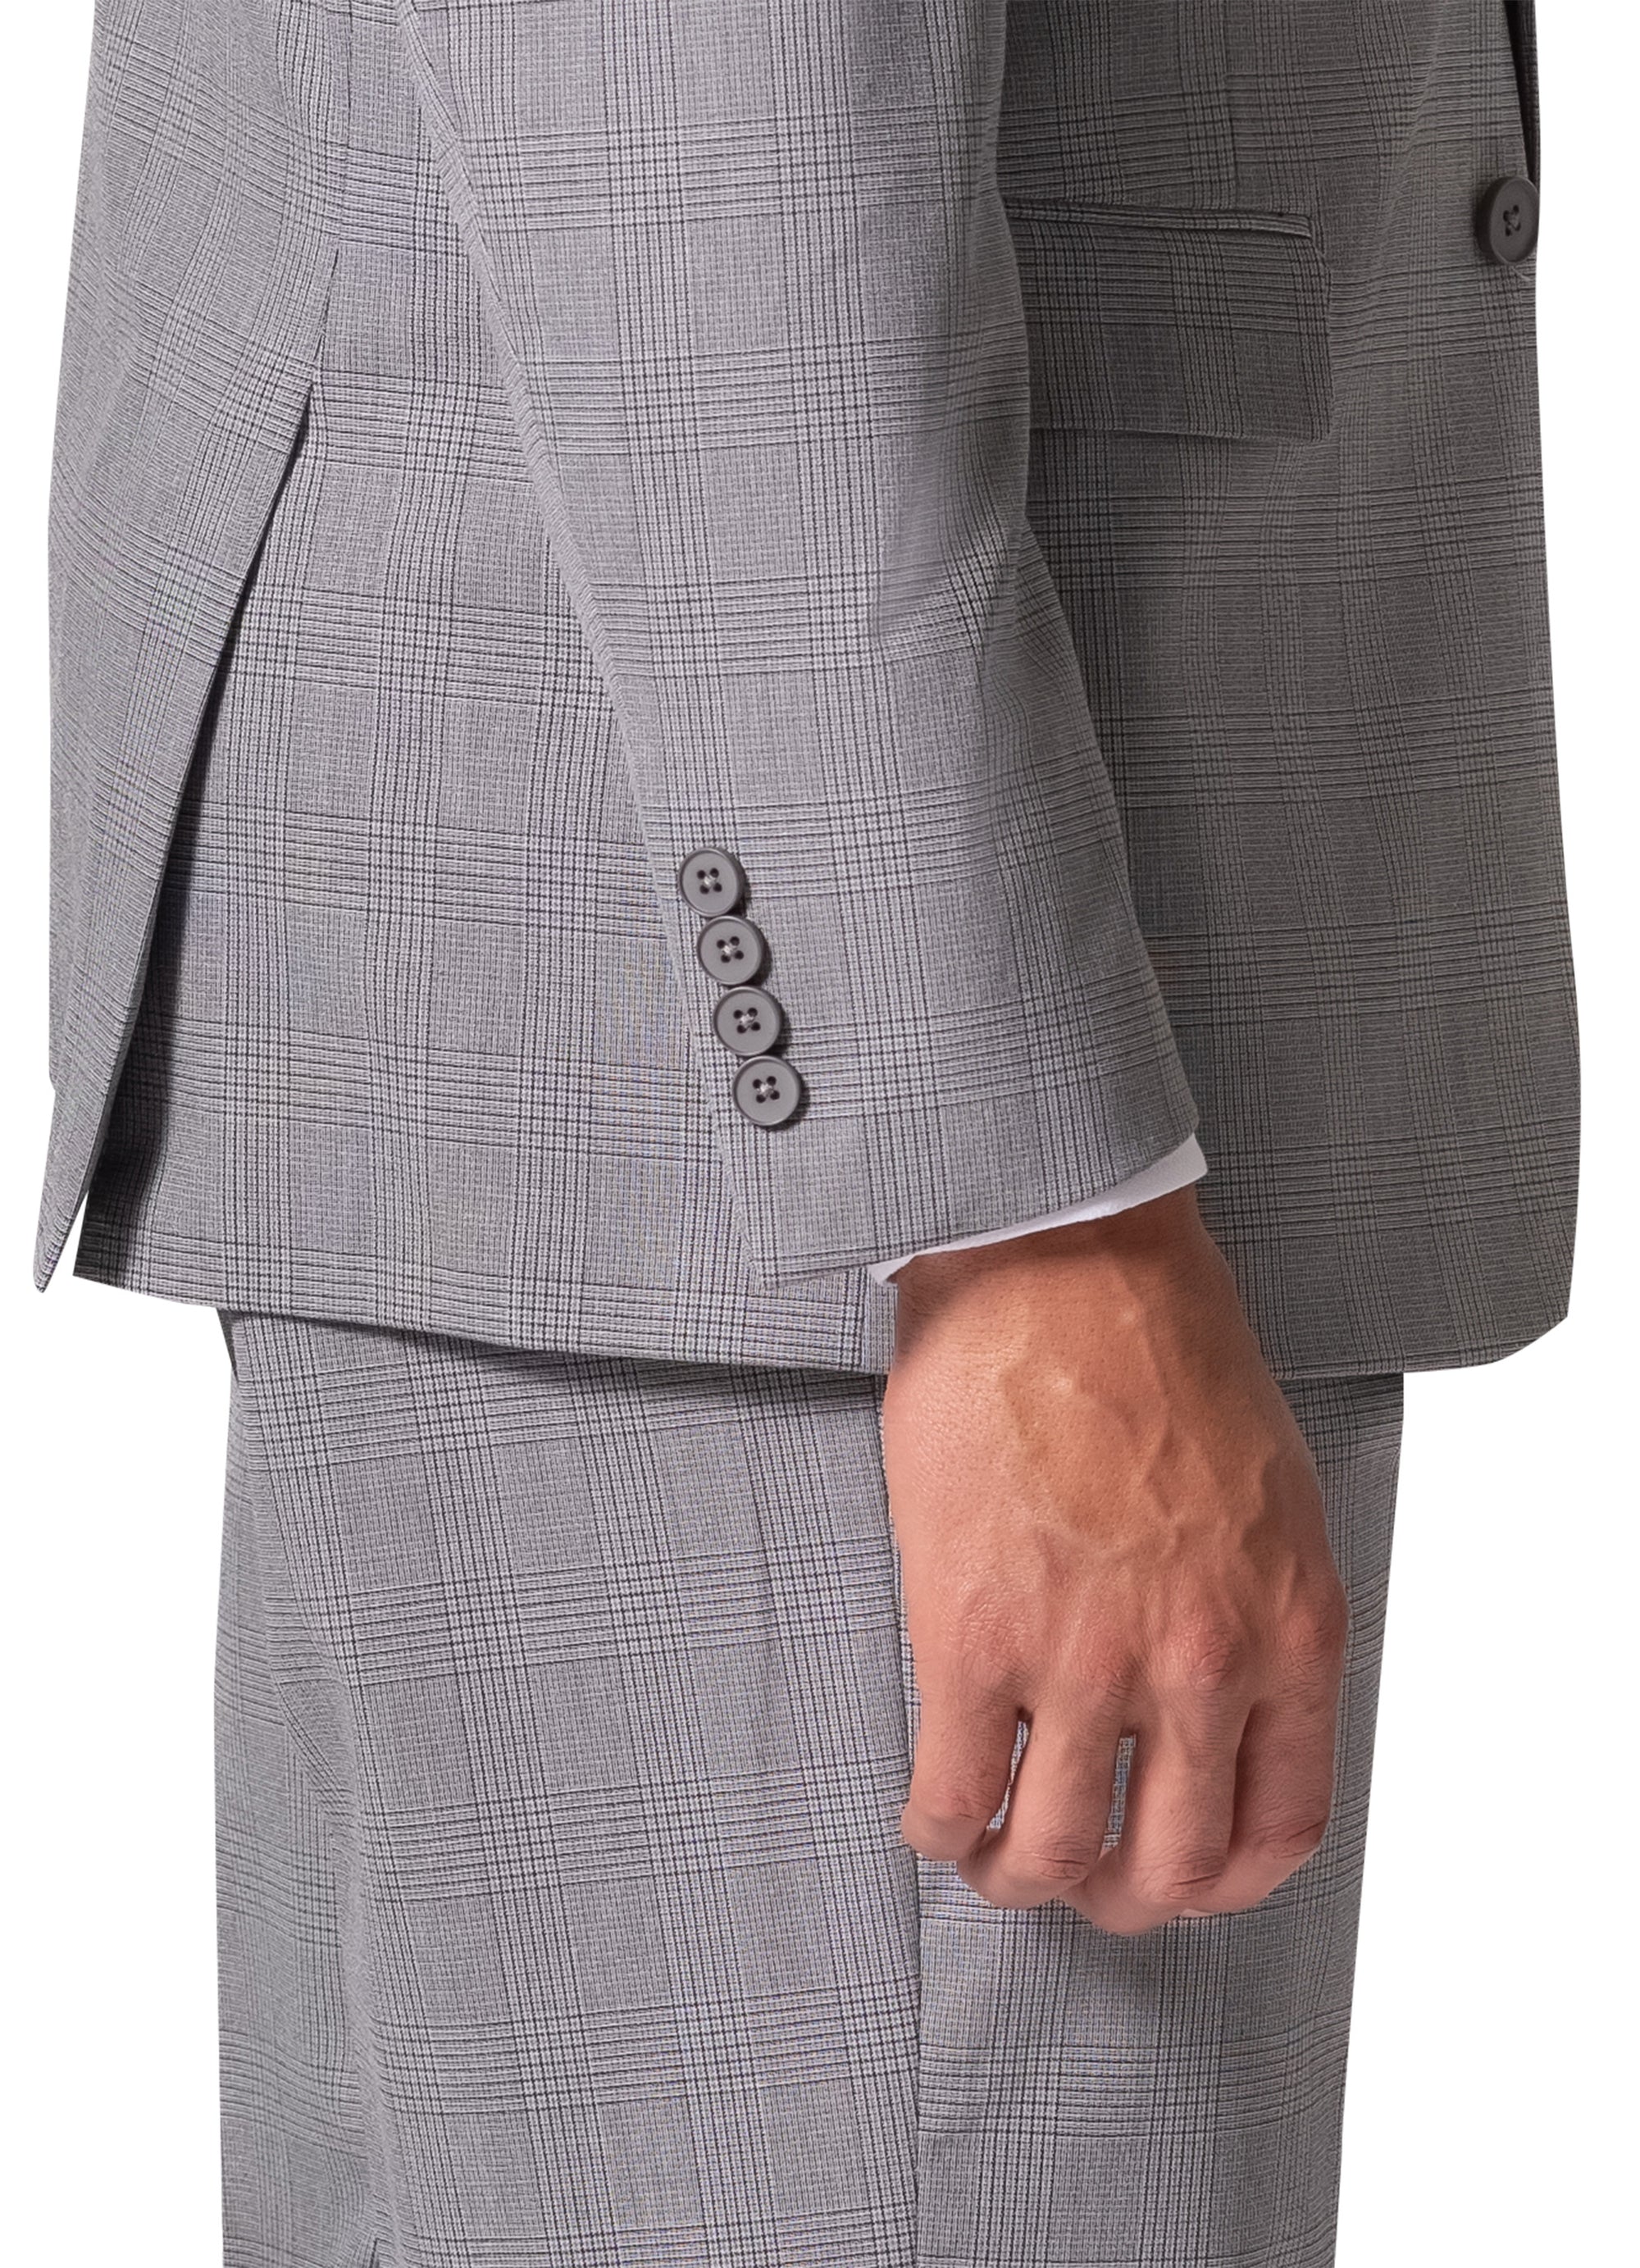 Berragamo BP04KE-07 3PC Notch Slim Suit - Grey